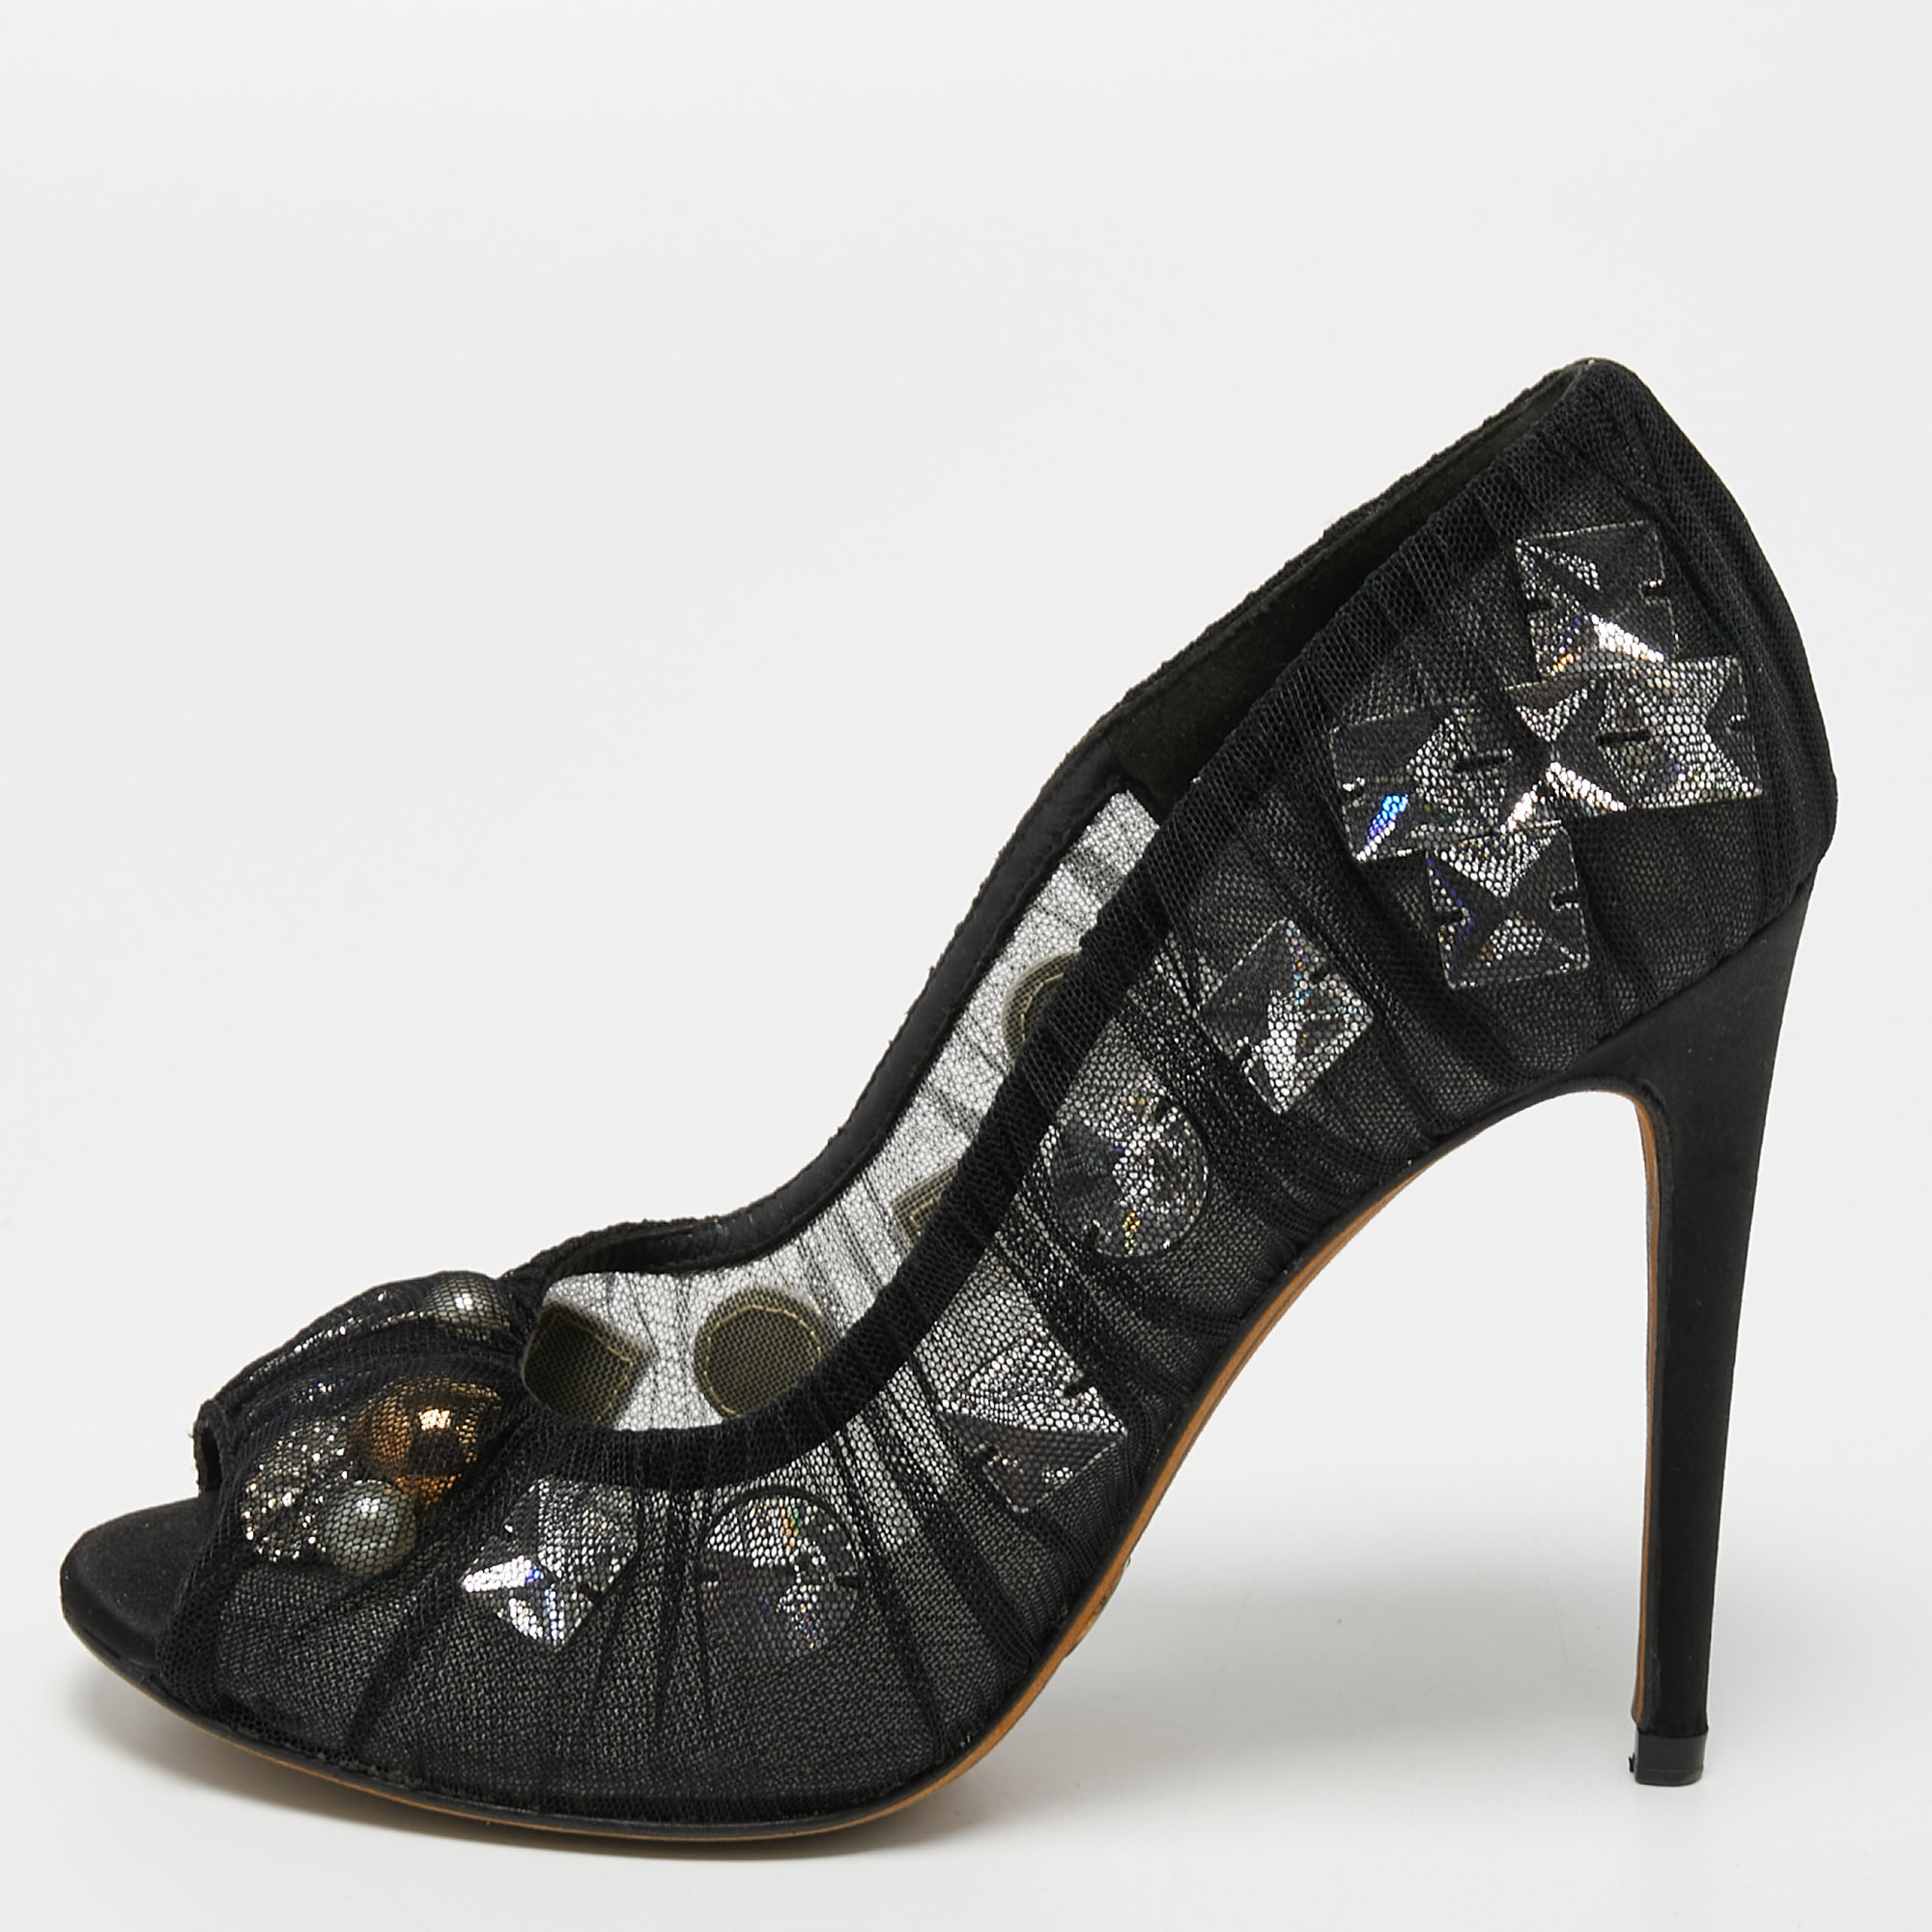 Pre-owned Dolce & Gabbana Black Net Crystal Embellished Peep Toe Pumps Size 37.5